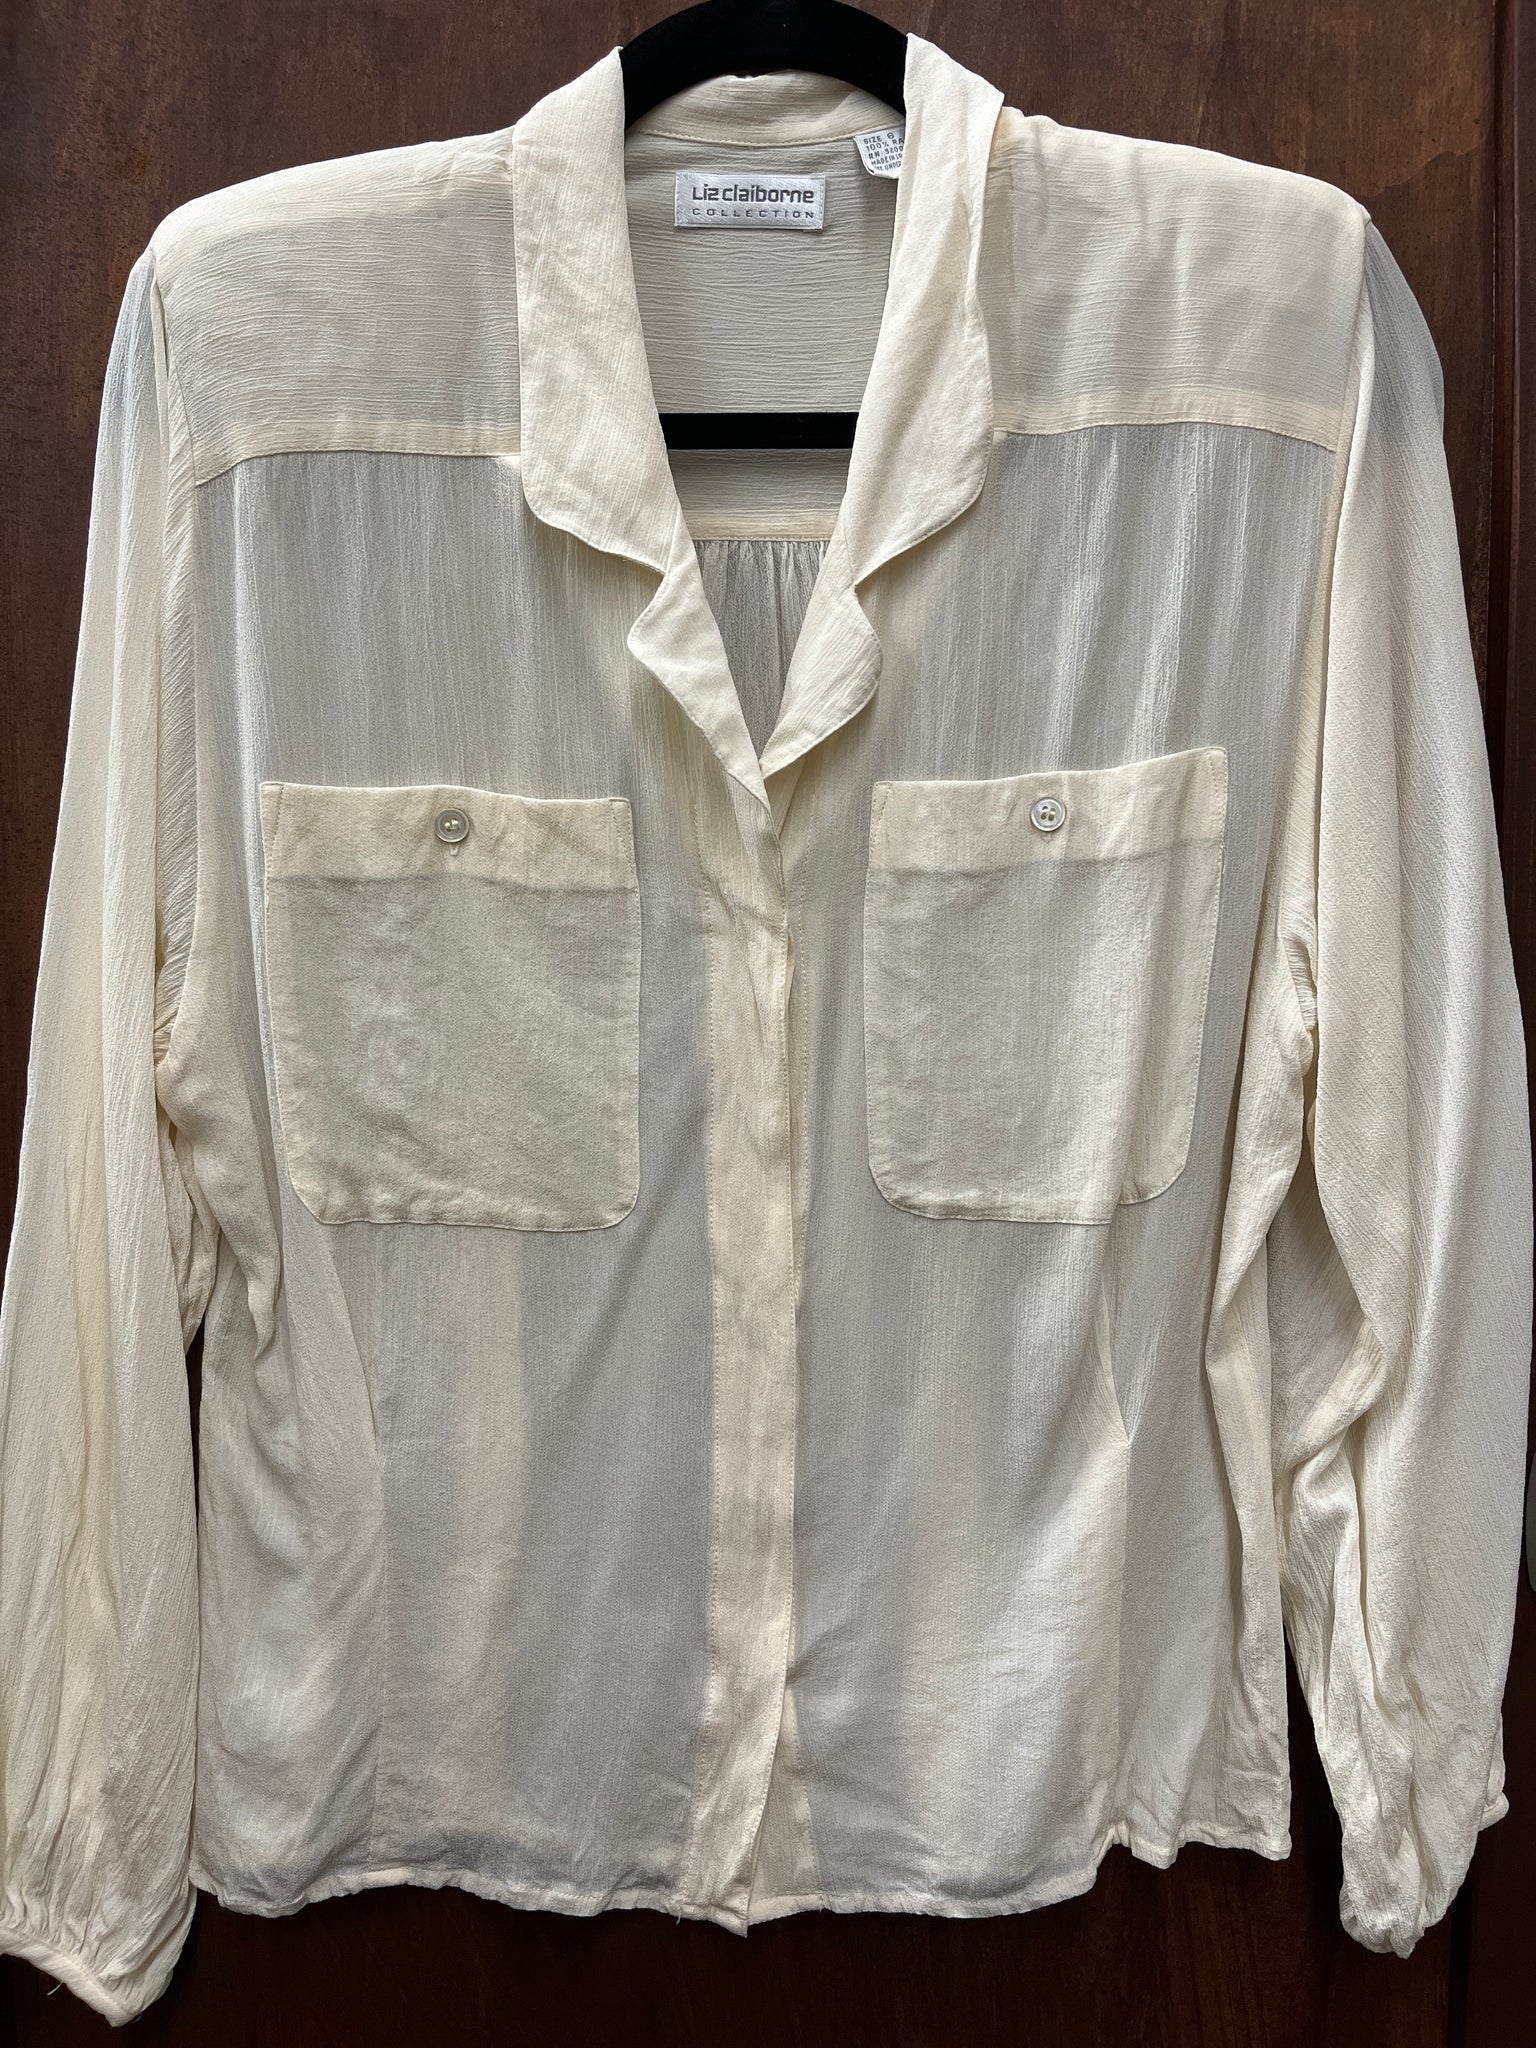 1980s TOP- Liz Claiborne- cream rayon blouse